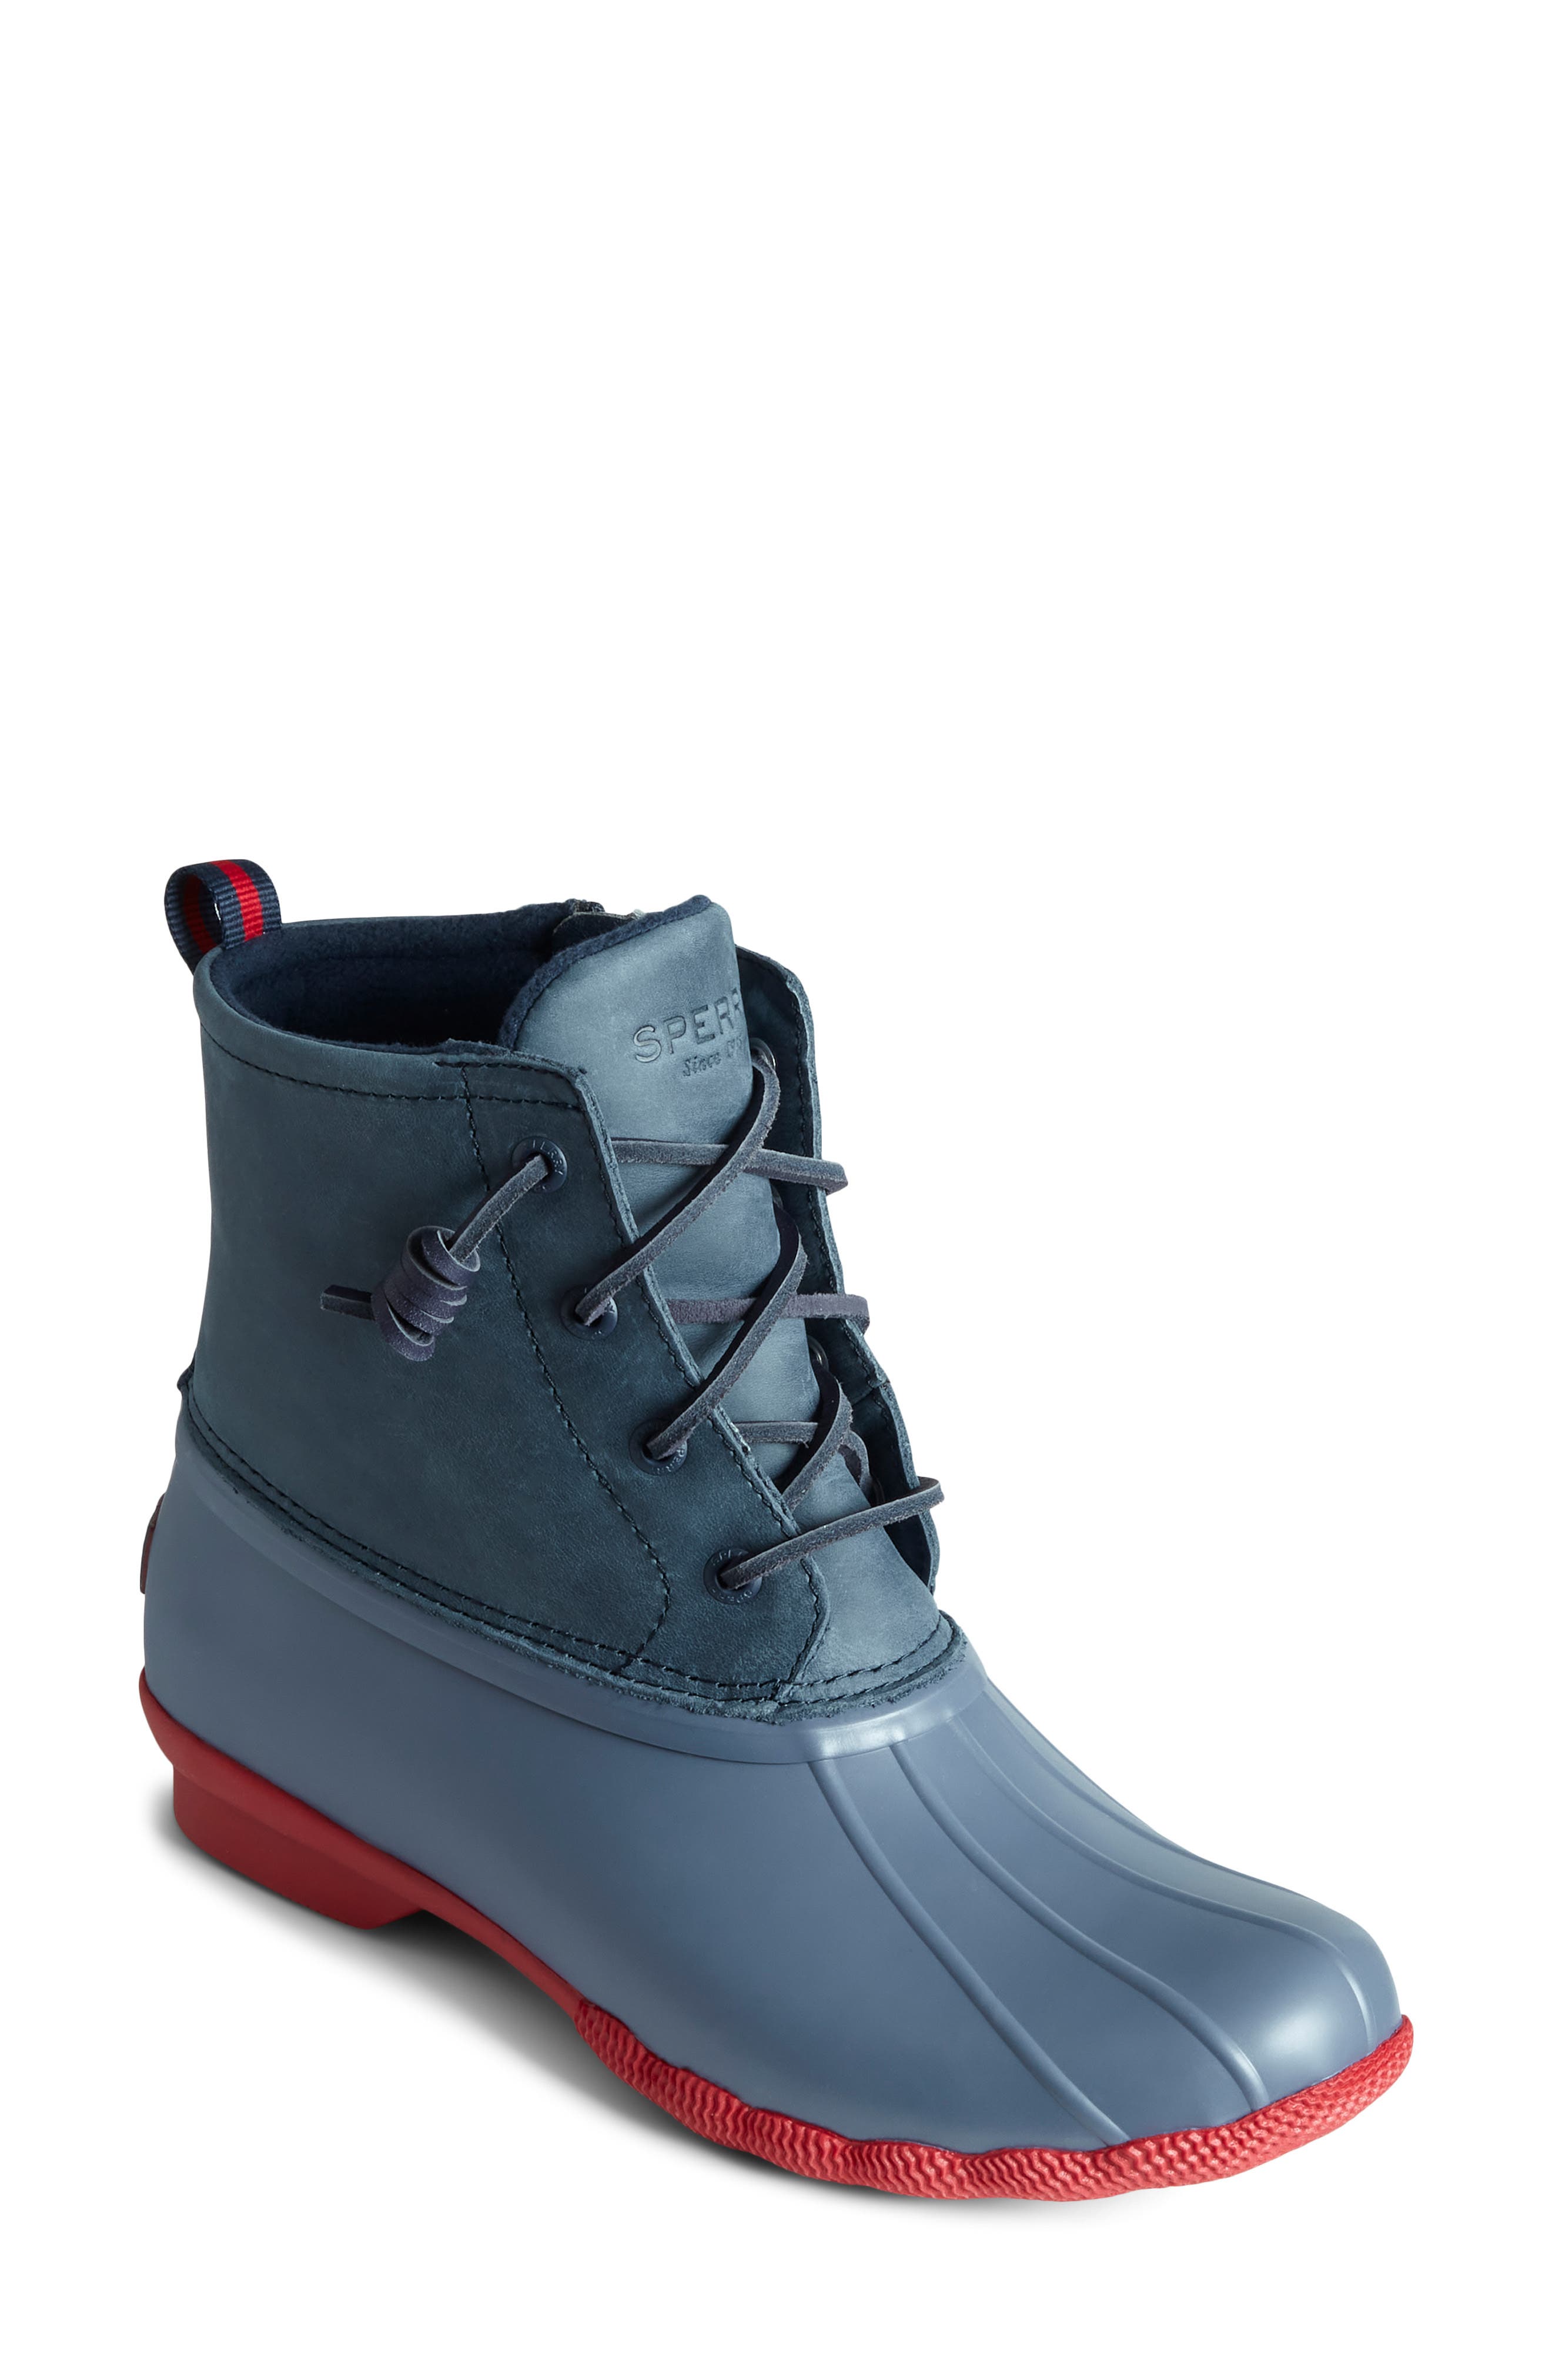 navy blue boots women's shoes